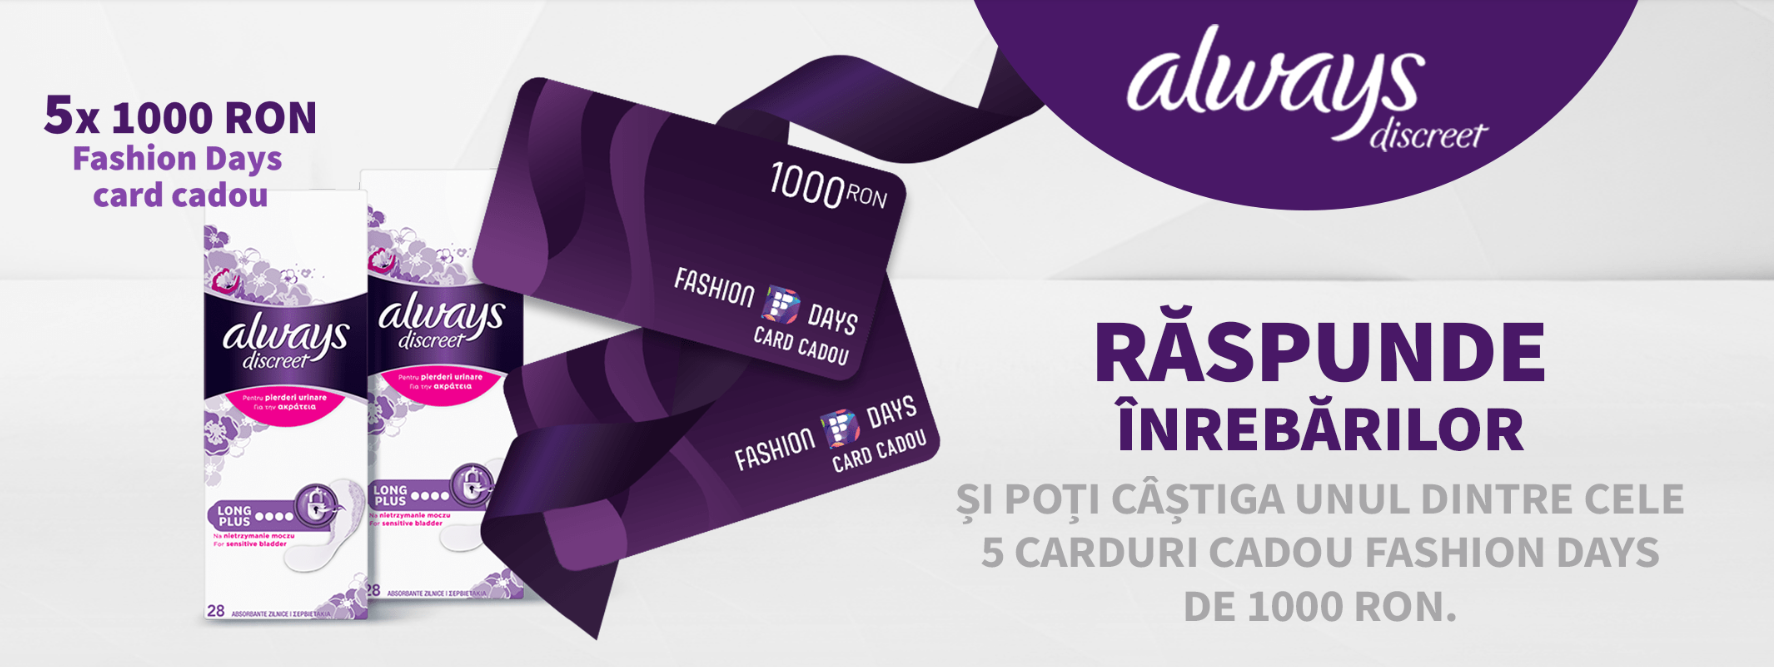 Concurs Always Discreet - Castiga un card cadou in valoare de 1000 RON pe Fashion Days - castiga.net